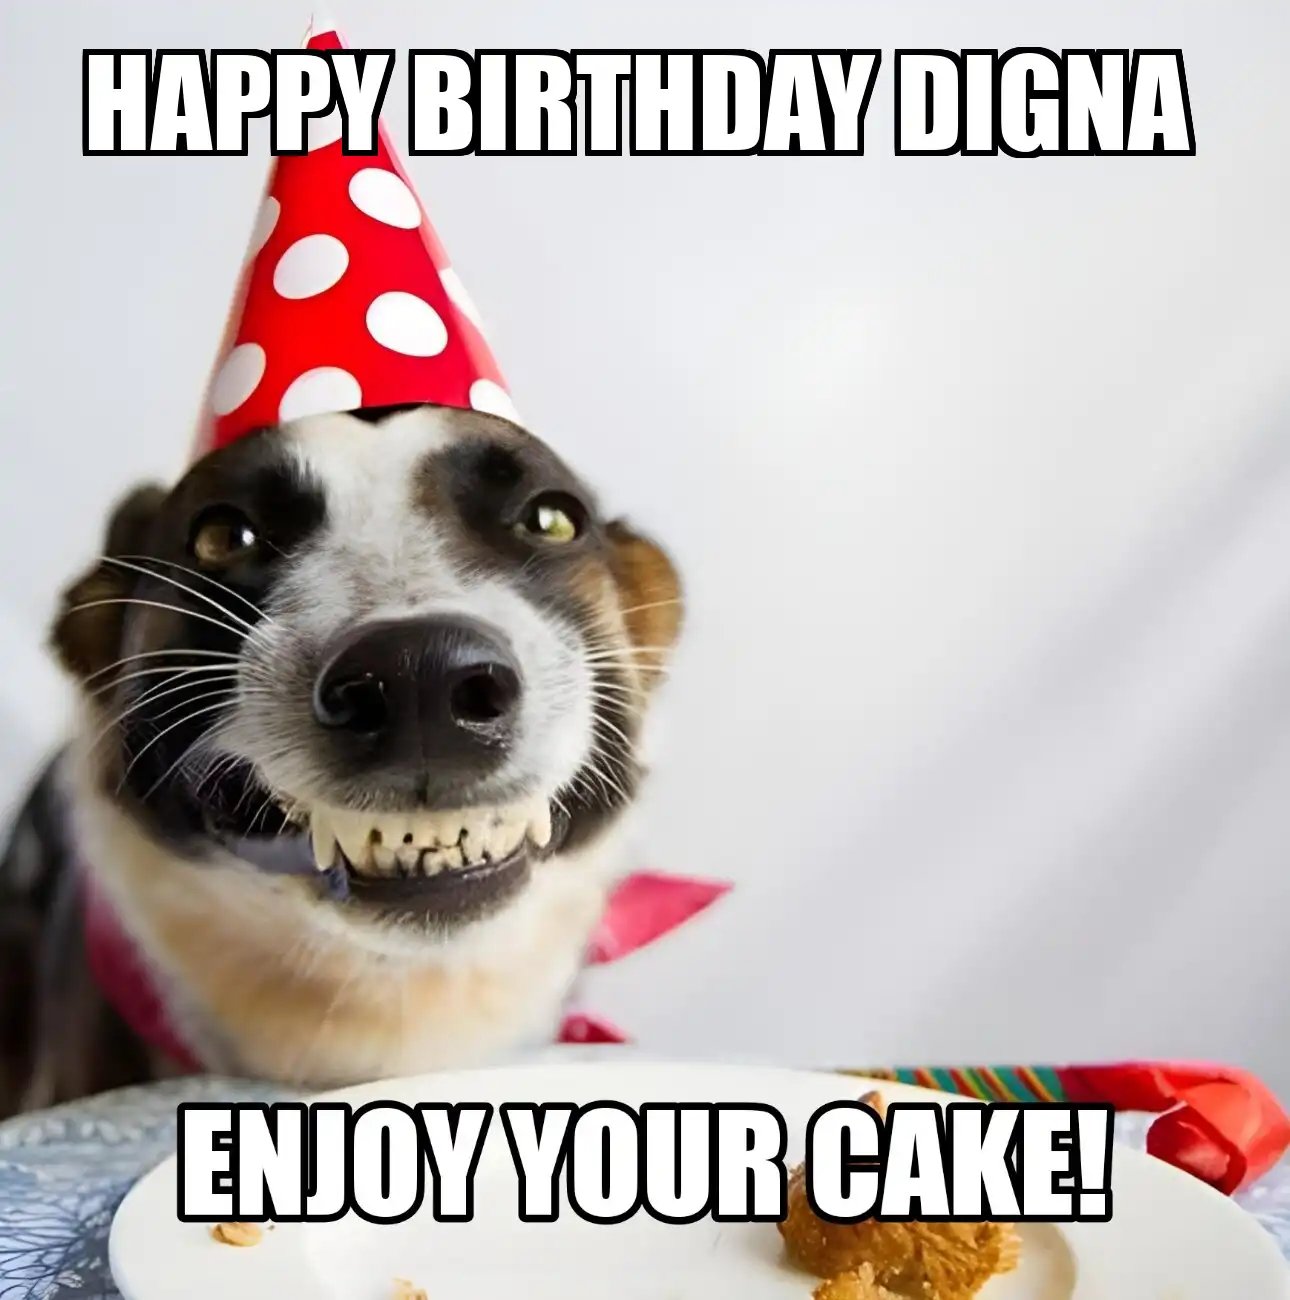 Happy Birthday Digna Enjoy Your Cake Dog Meme